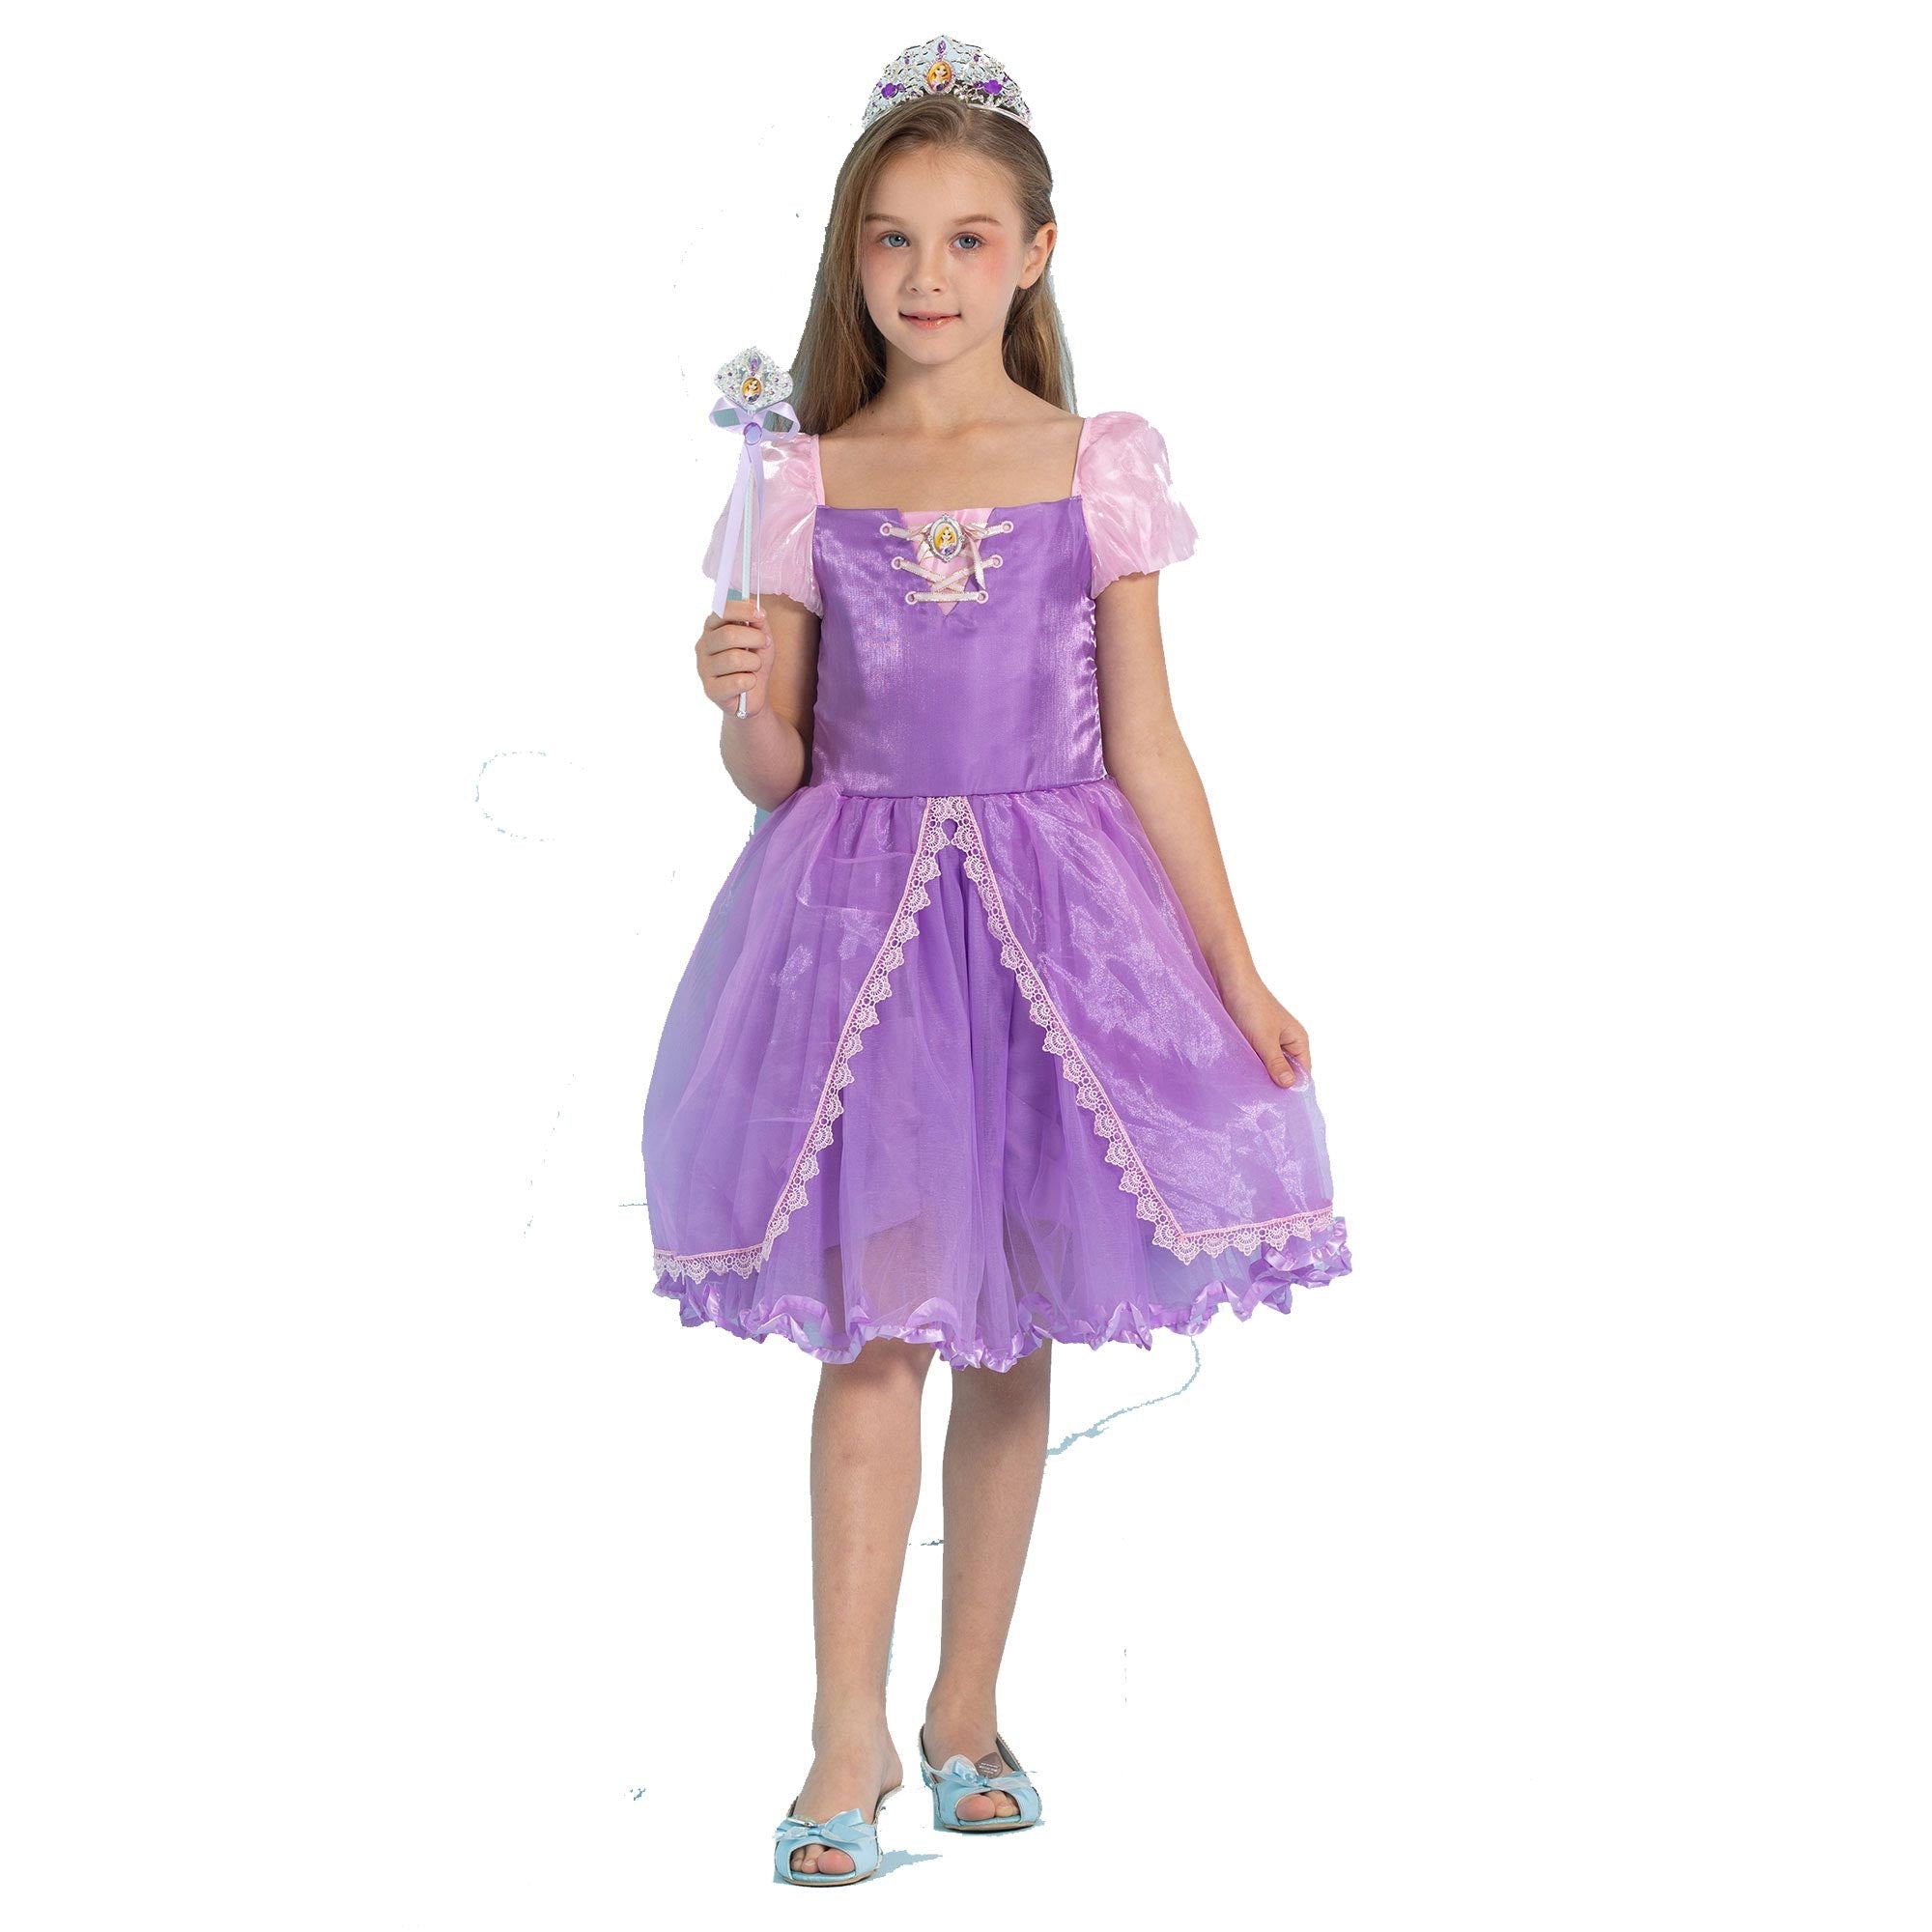 Disney Princess Gem Princess Snow White Tween Children's Fancy